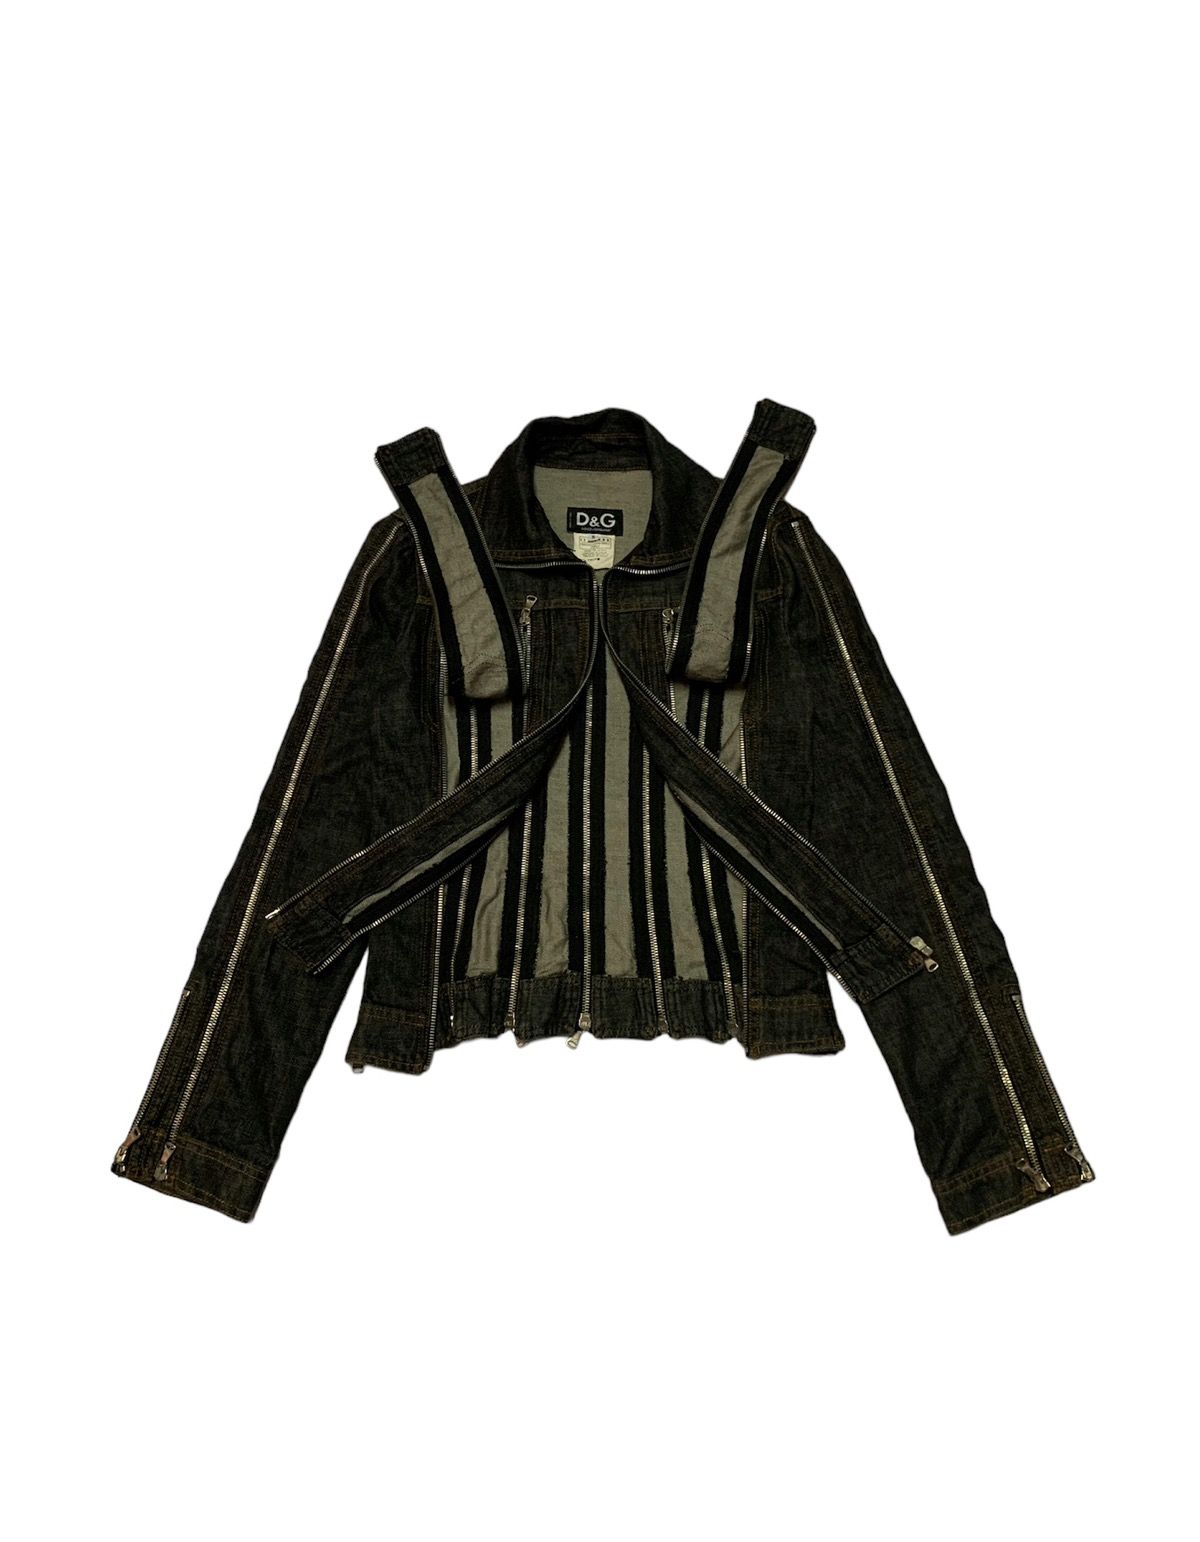 Rare D&G Dolce Gabbana Zipper 2004 Shredder Denim Jacket - 2